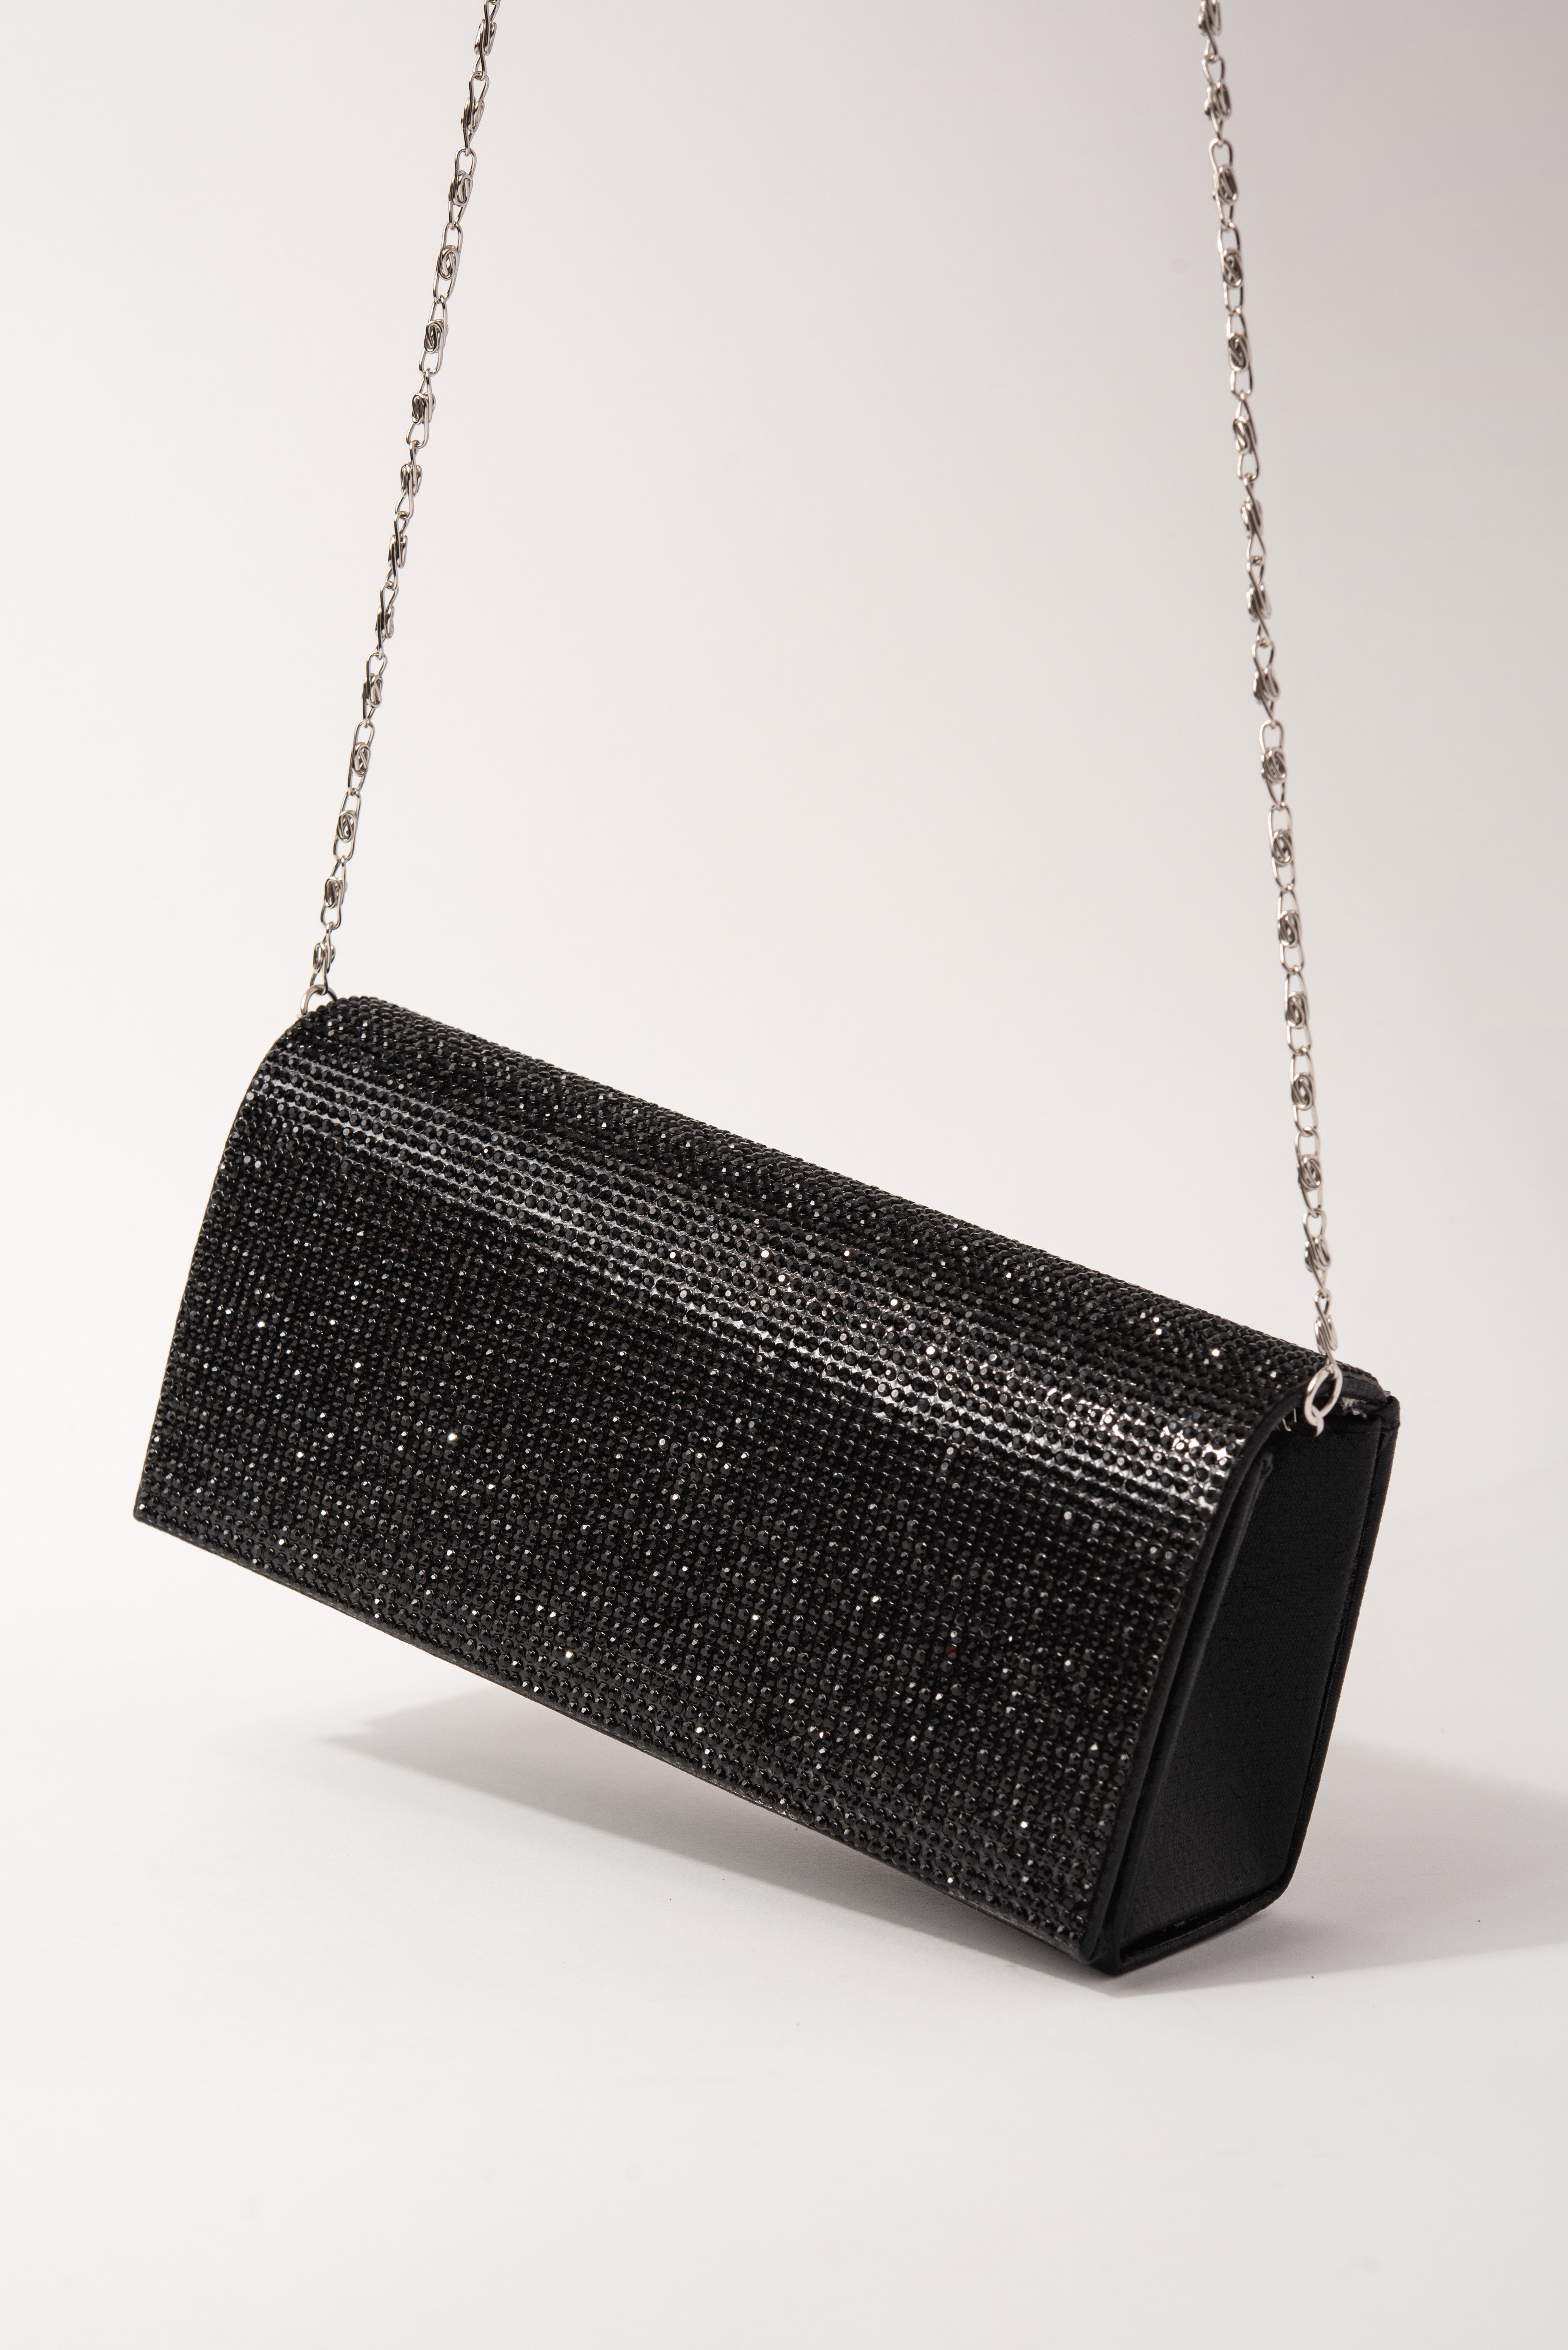 Sither Rhinestone Handbag Purses for Women Evening Handbag Crystal Clutch  Purses Sparkly Shoulder Chain Bags for Party Prom Christmas Gift (silver):  Handbags: Amazon.com